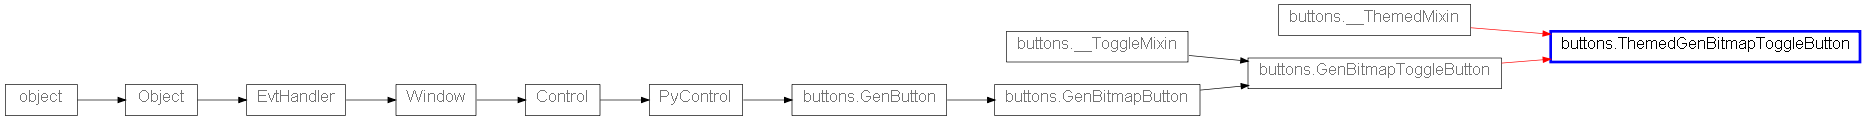 Inheritance diagram of ThemedGenBitmapToggleButton